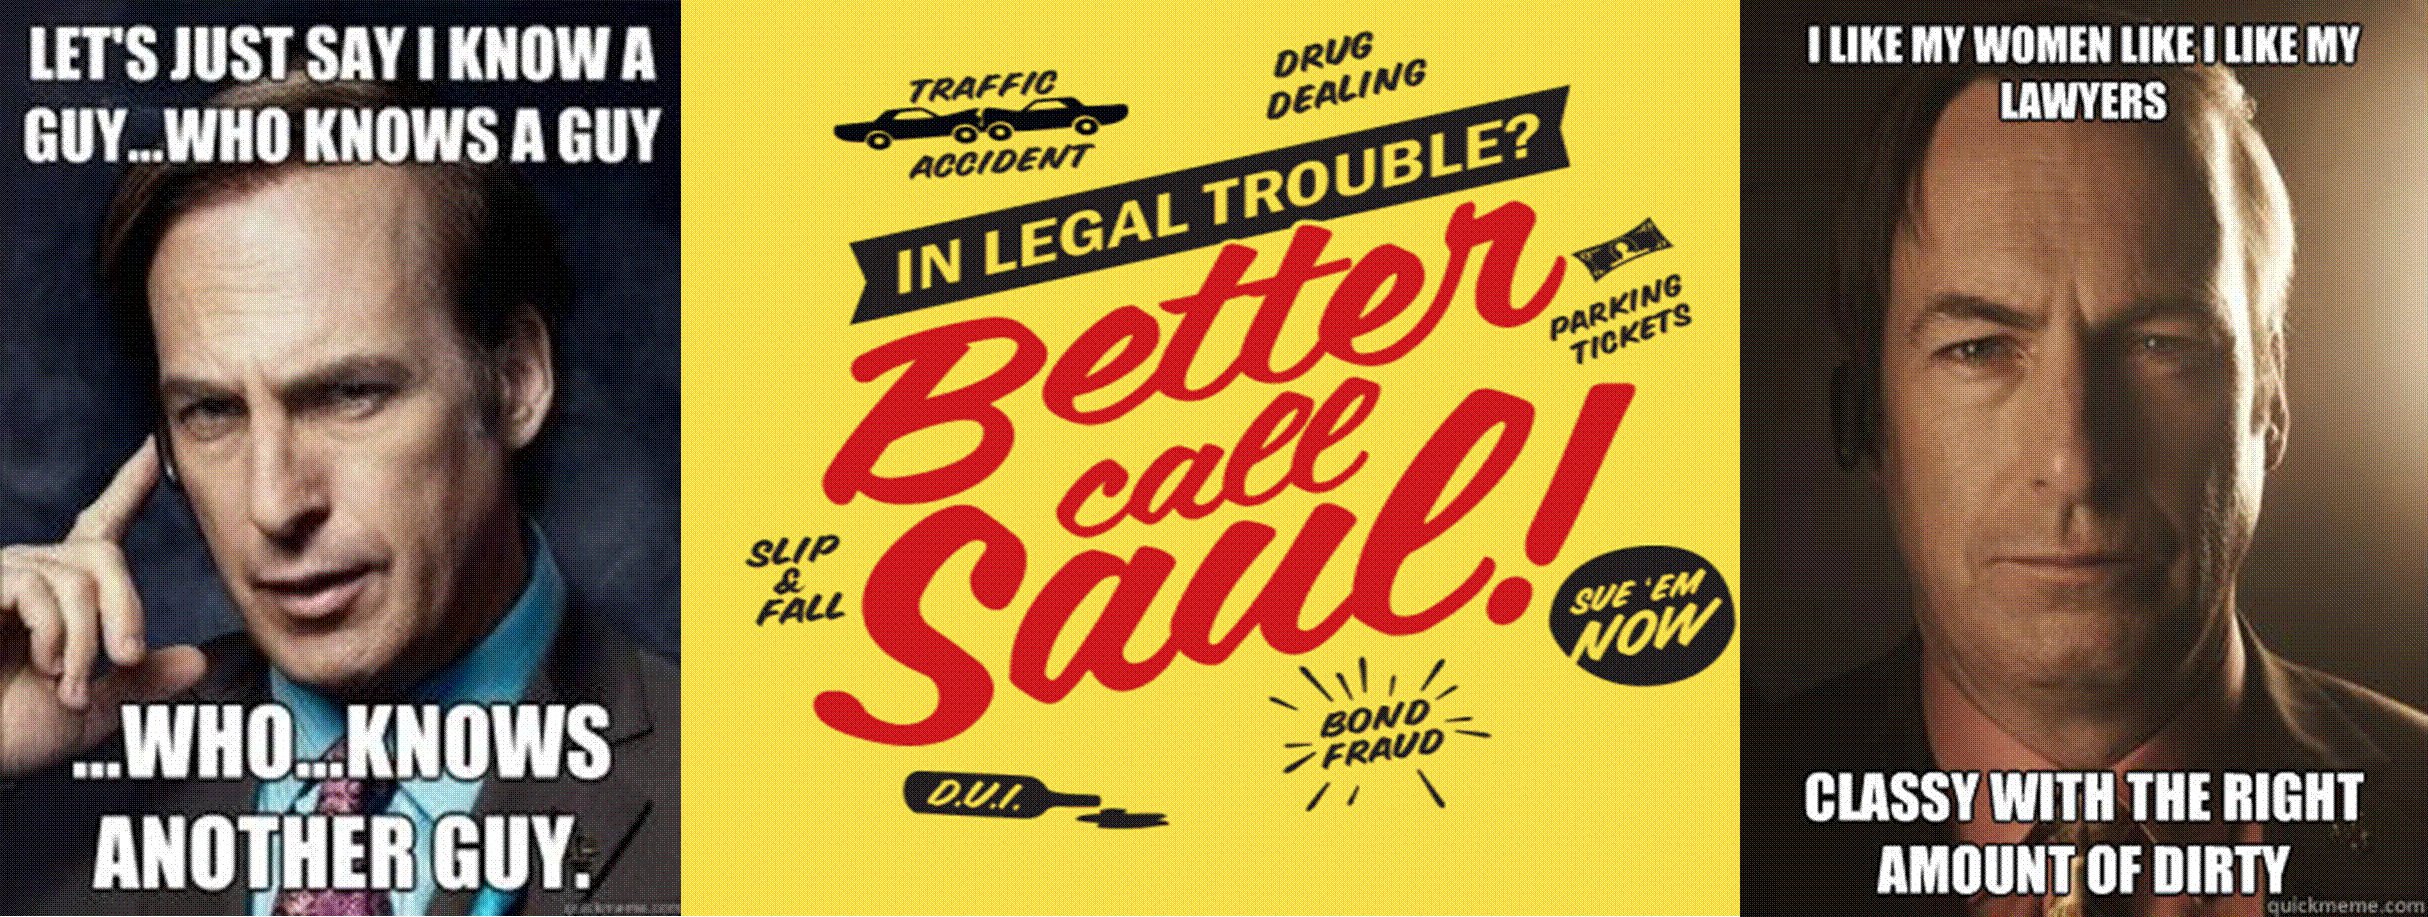 better call saul, Comedy, Drama, Series, Crime, Better, Call, Saul, Breaking Wallpaper